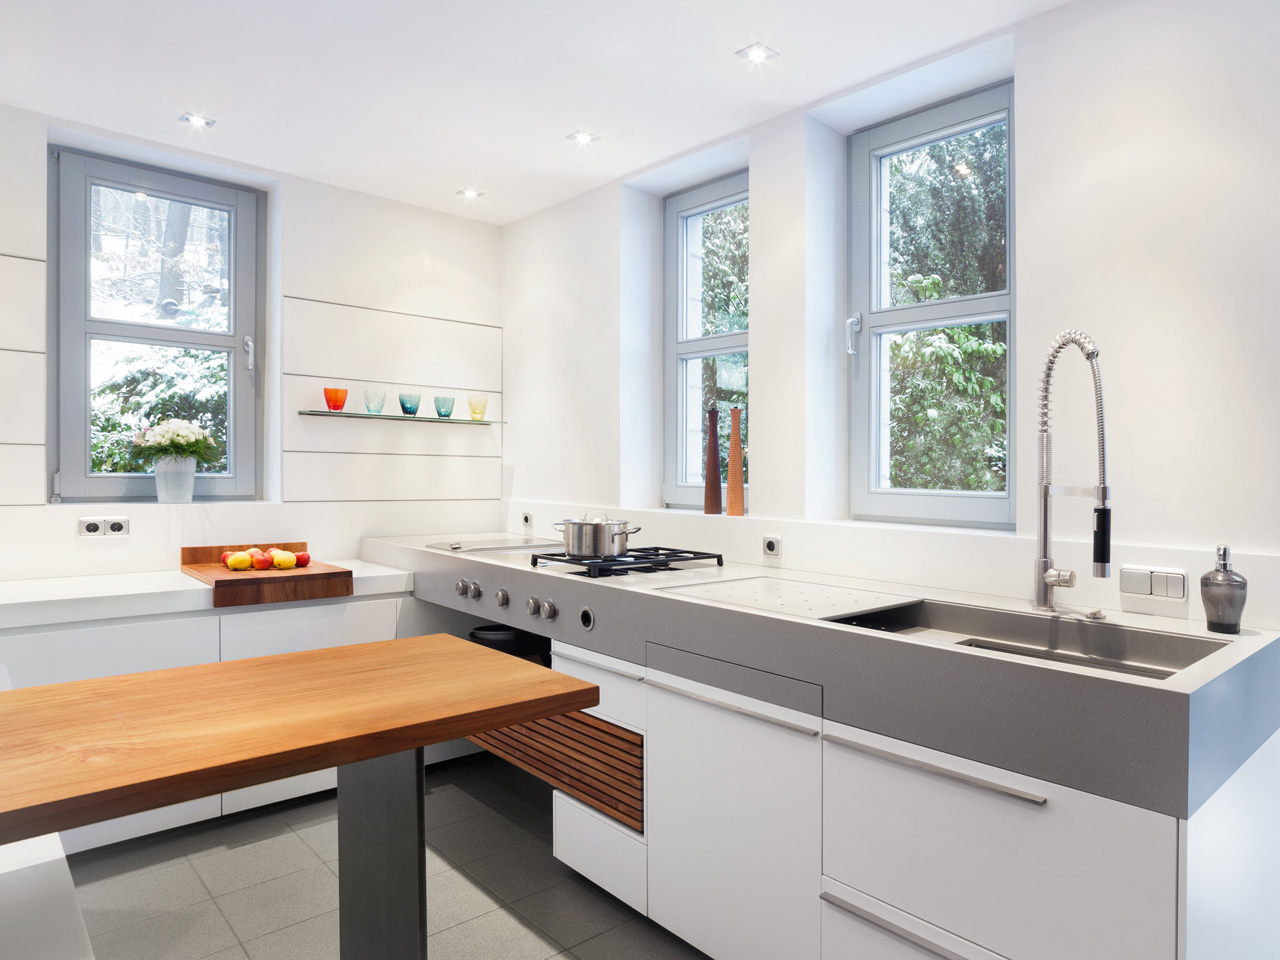 plan 3 kuchyně / Rezidencia v Nemecku / Klasický tvar miestností s moderným riešením